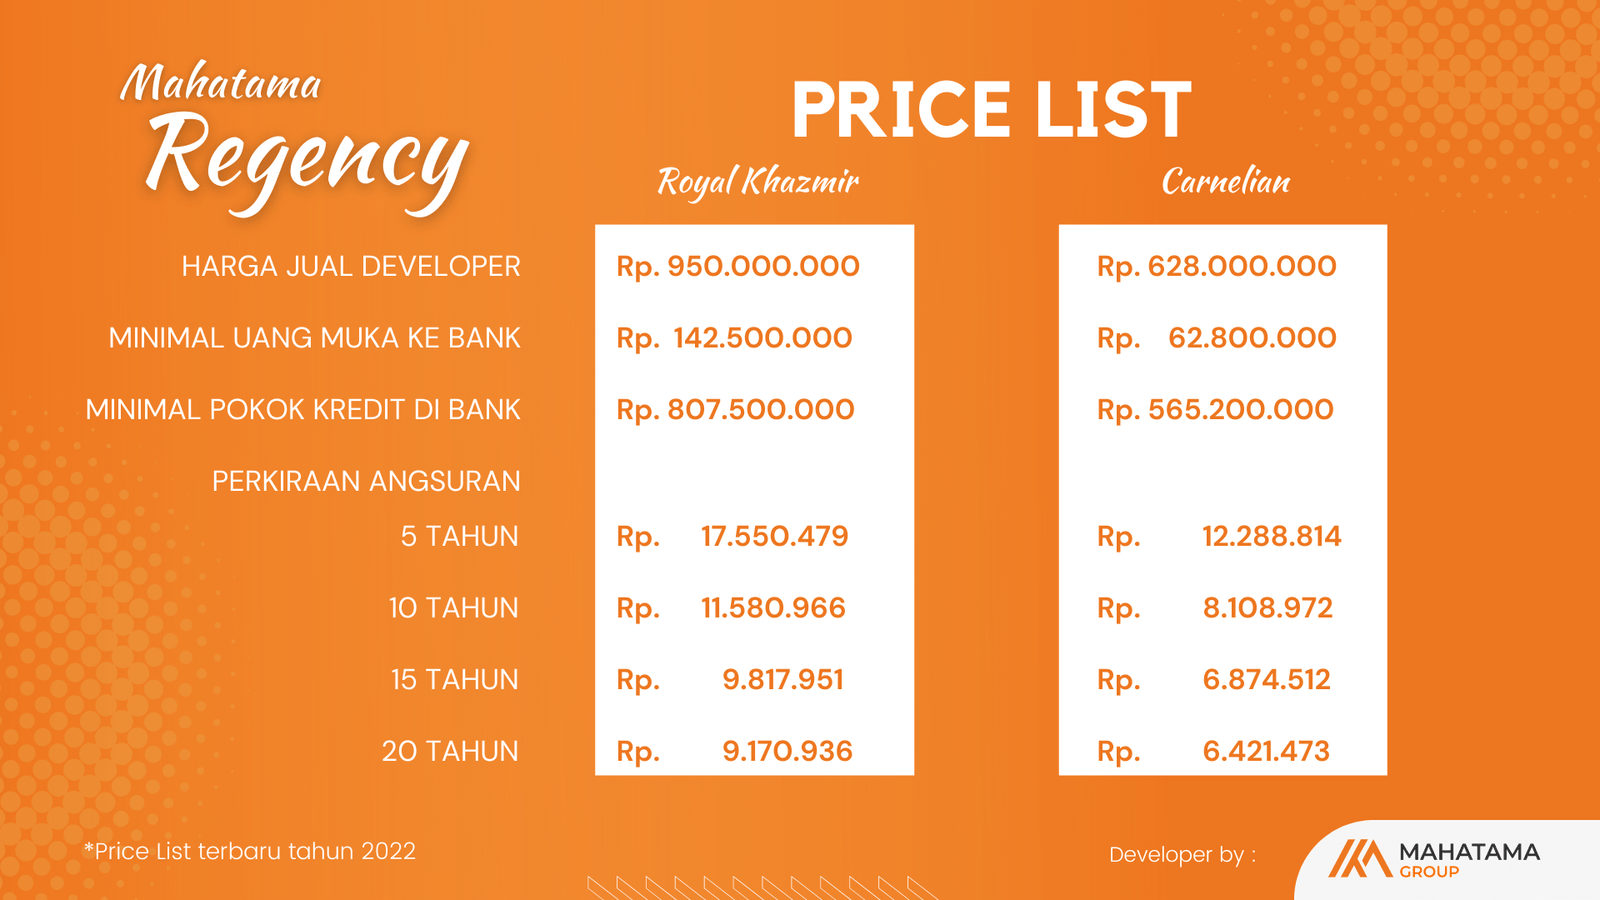 Price List Mahatama Regency - KPR